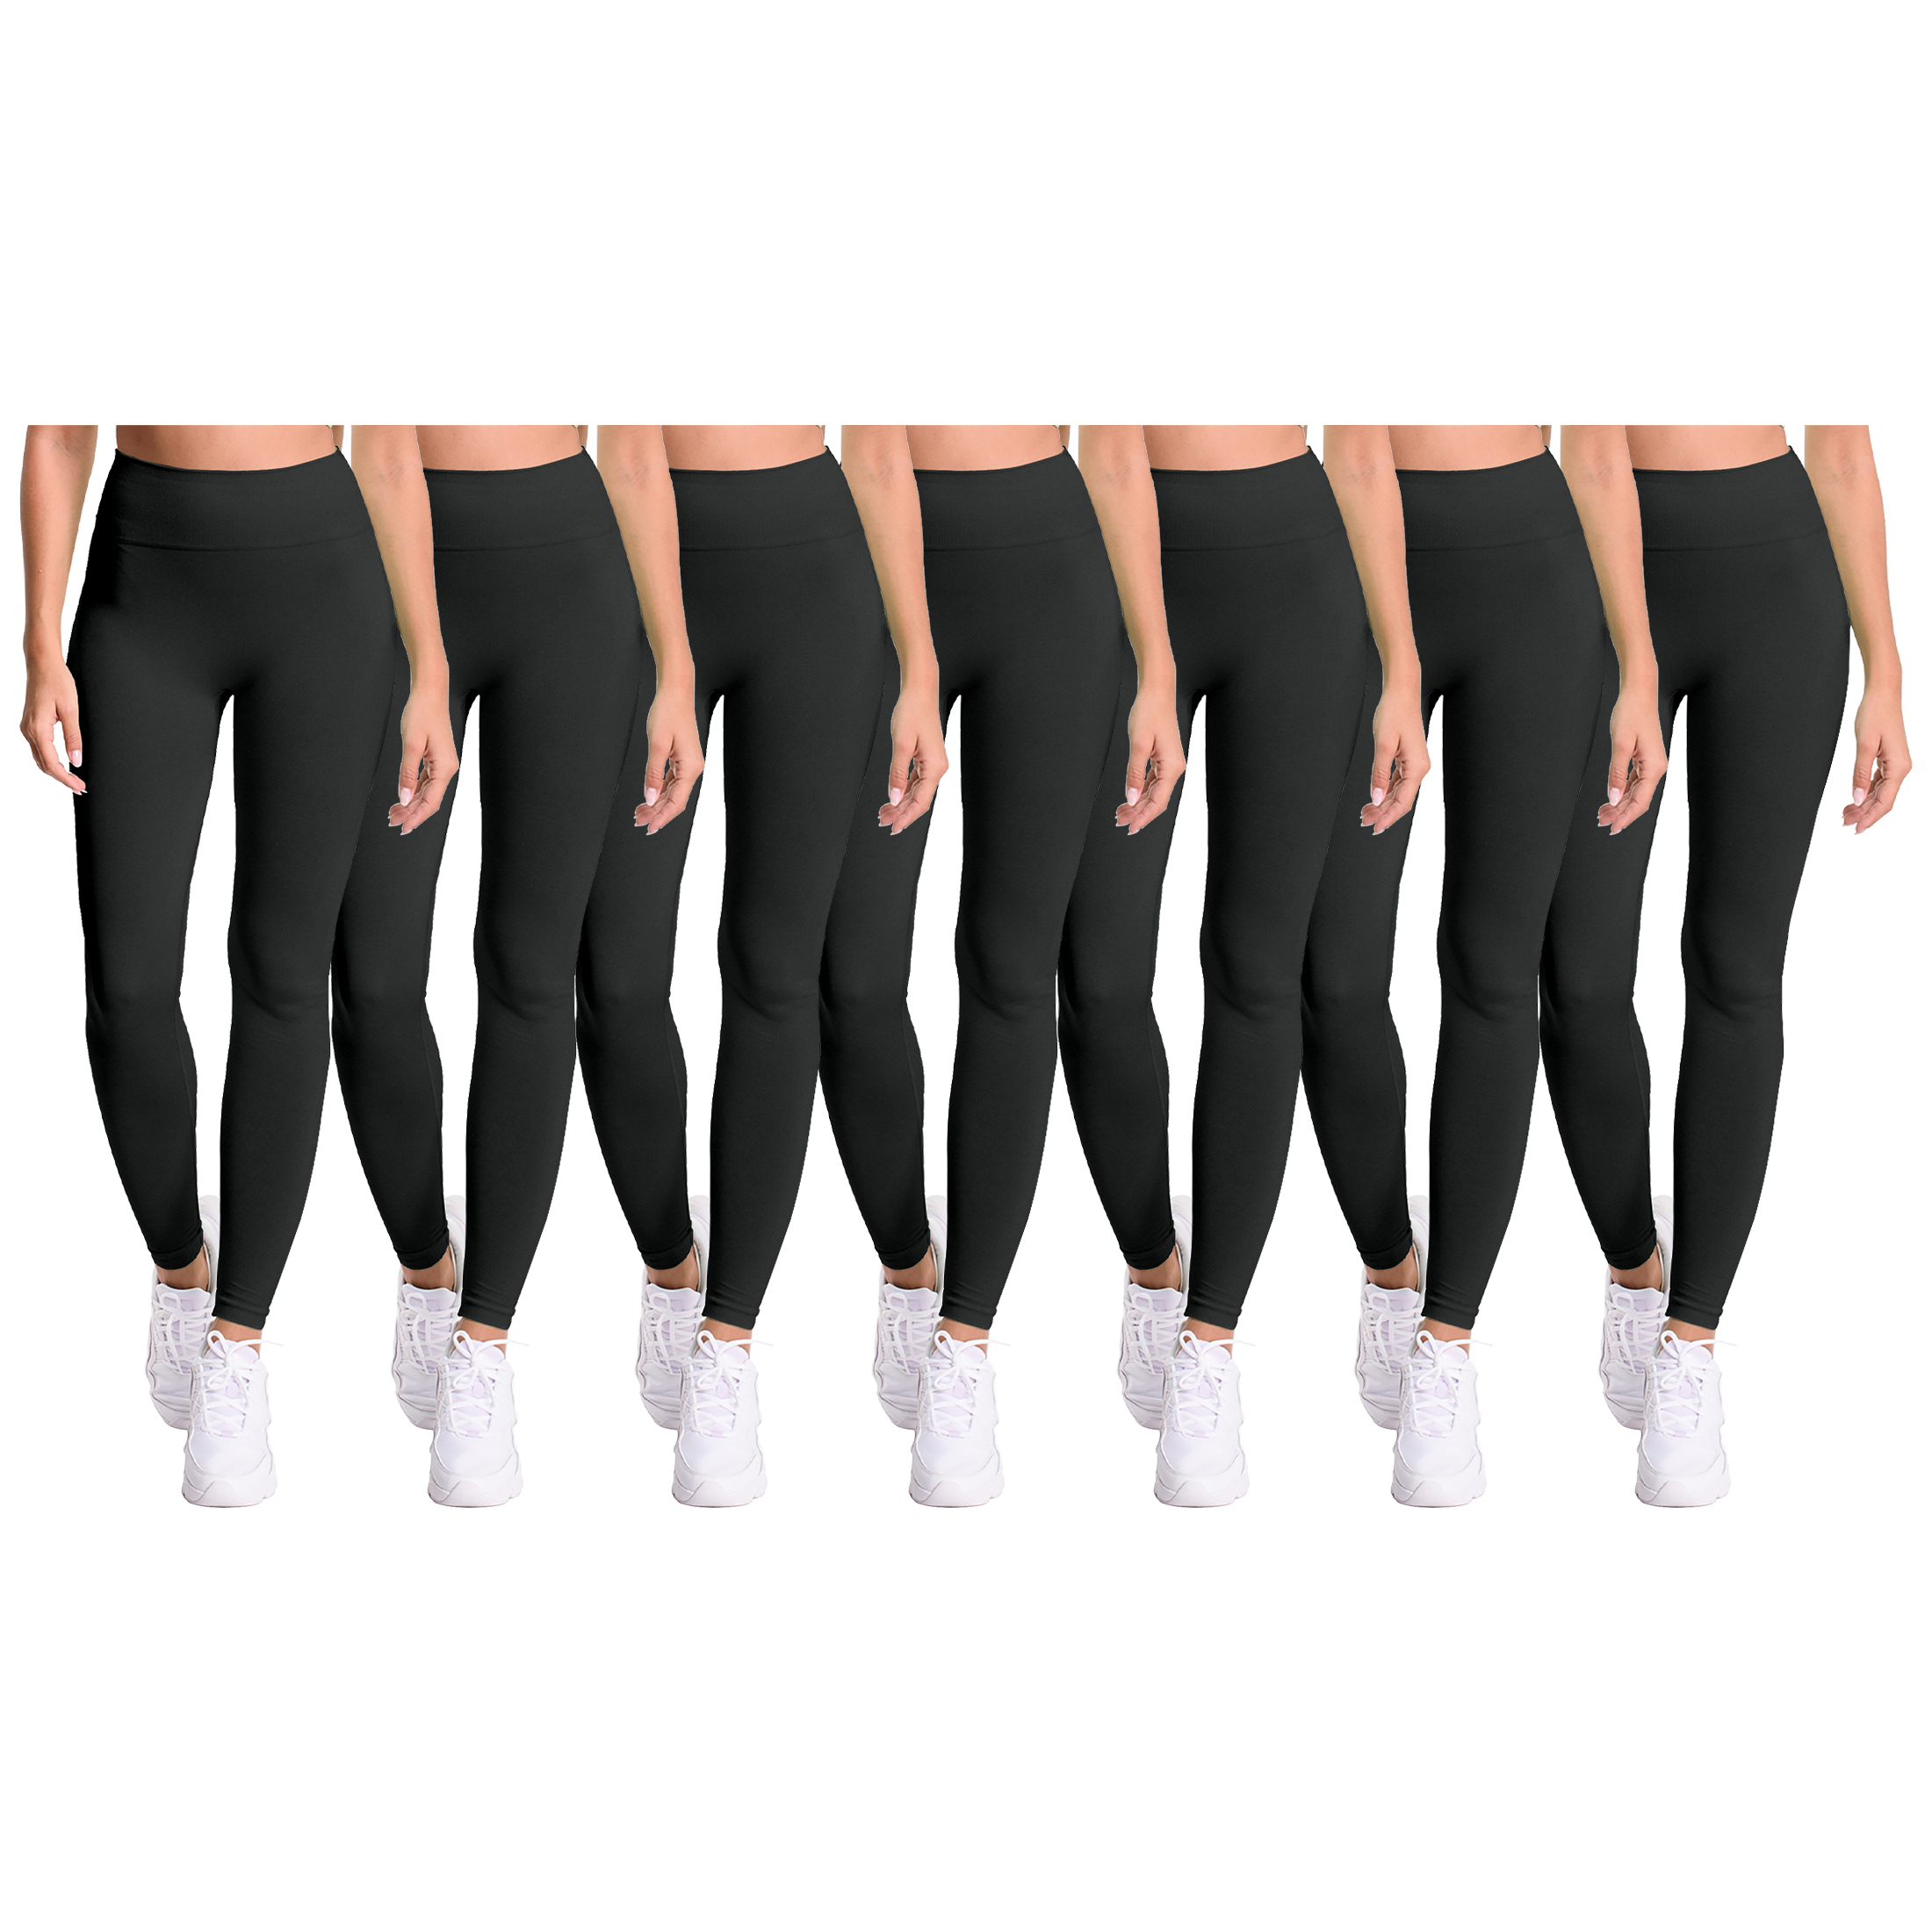 6-Pack: Women's Cozy Fleece-Lined Workout Yoga Pants Seamless Leggings - Black, X-Large